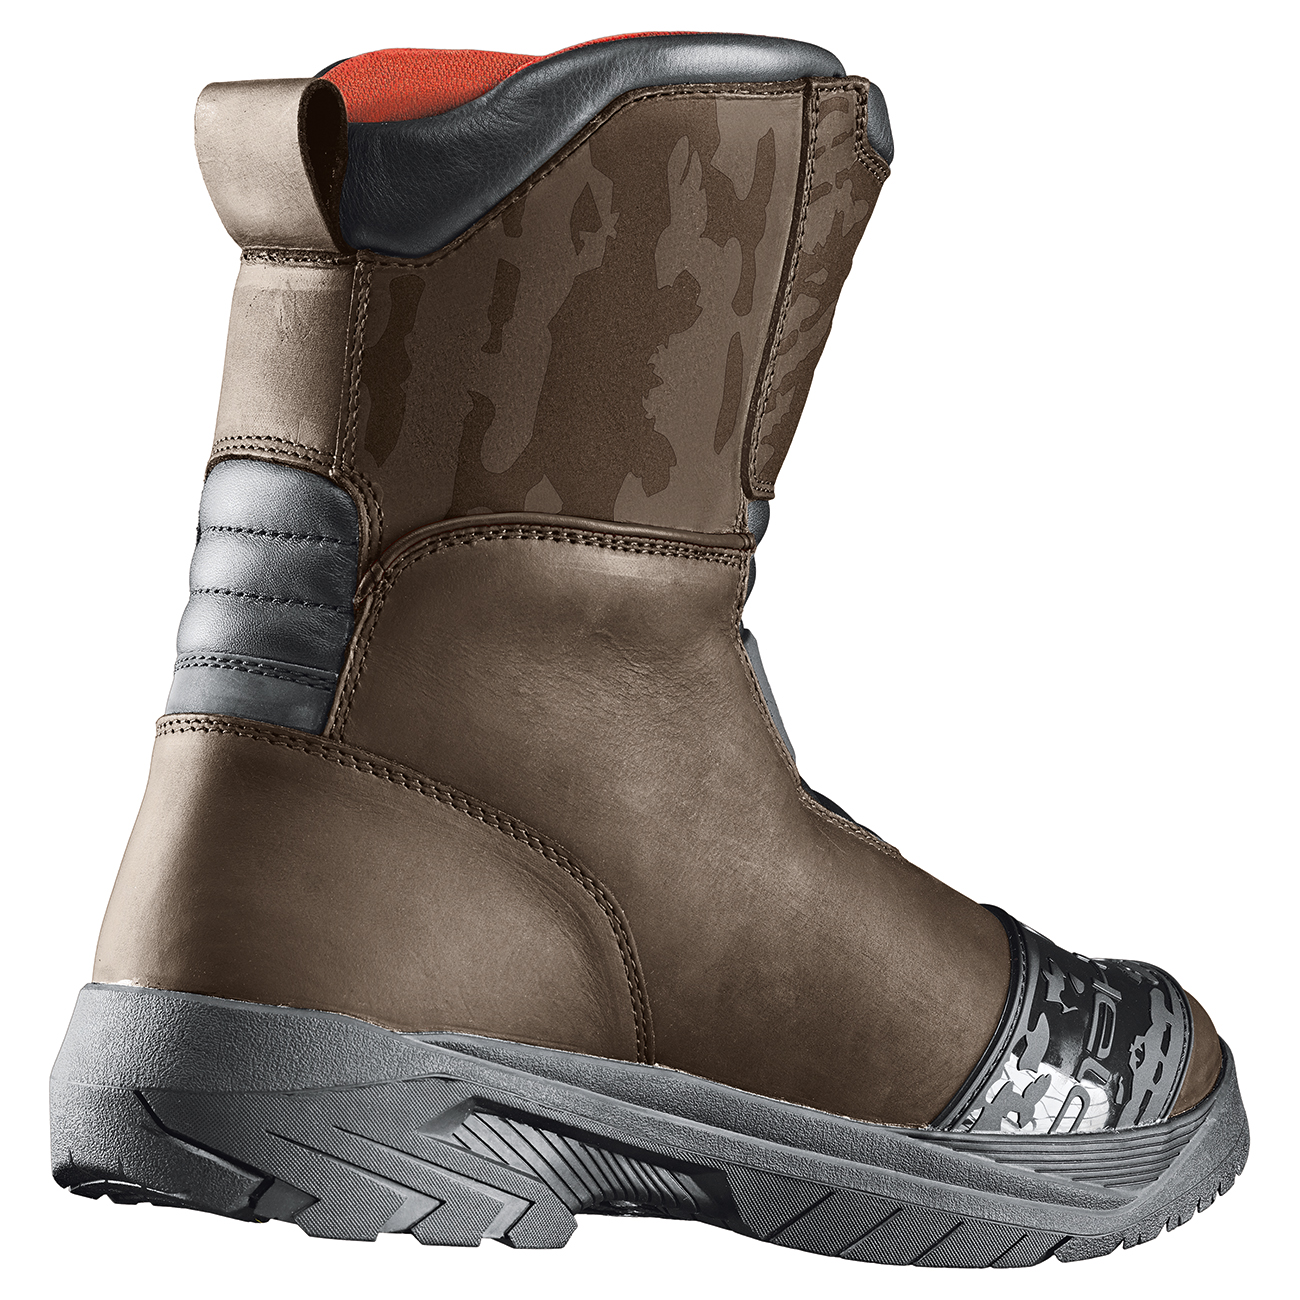 Brickland LC Gore-Tex boots